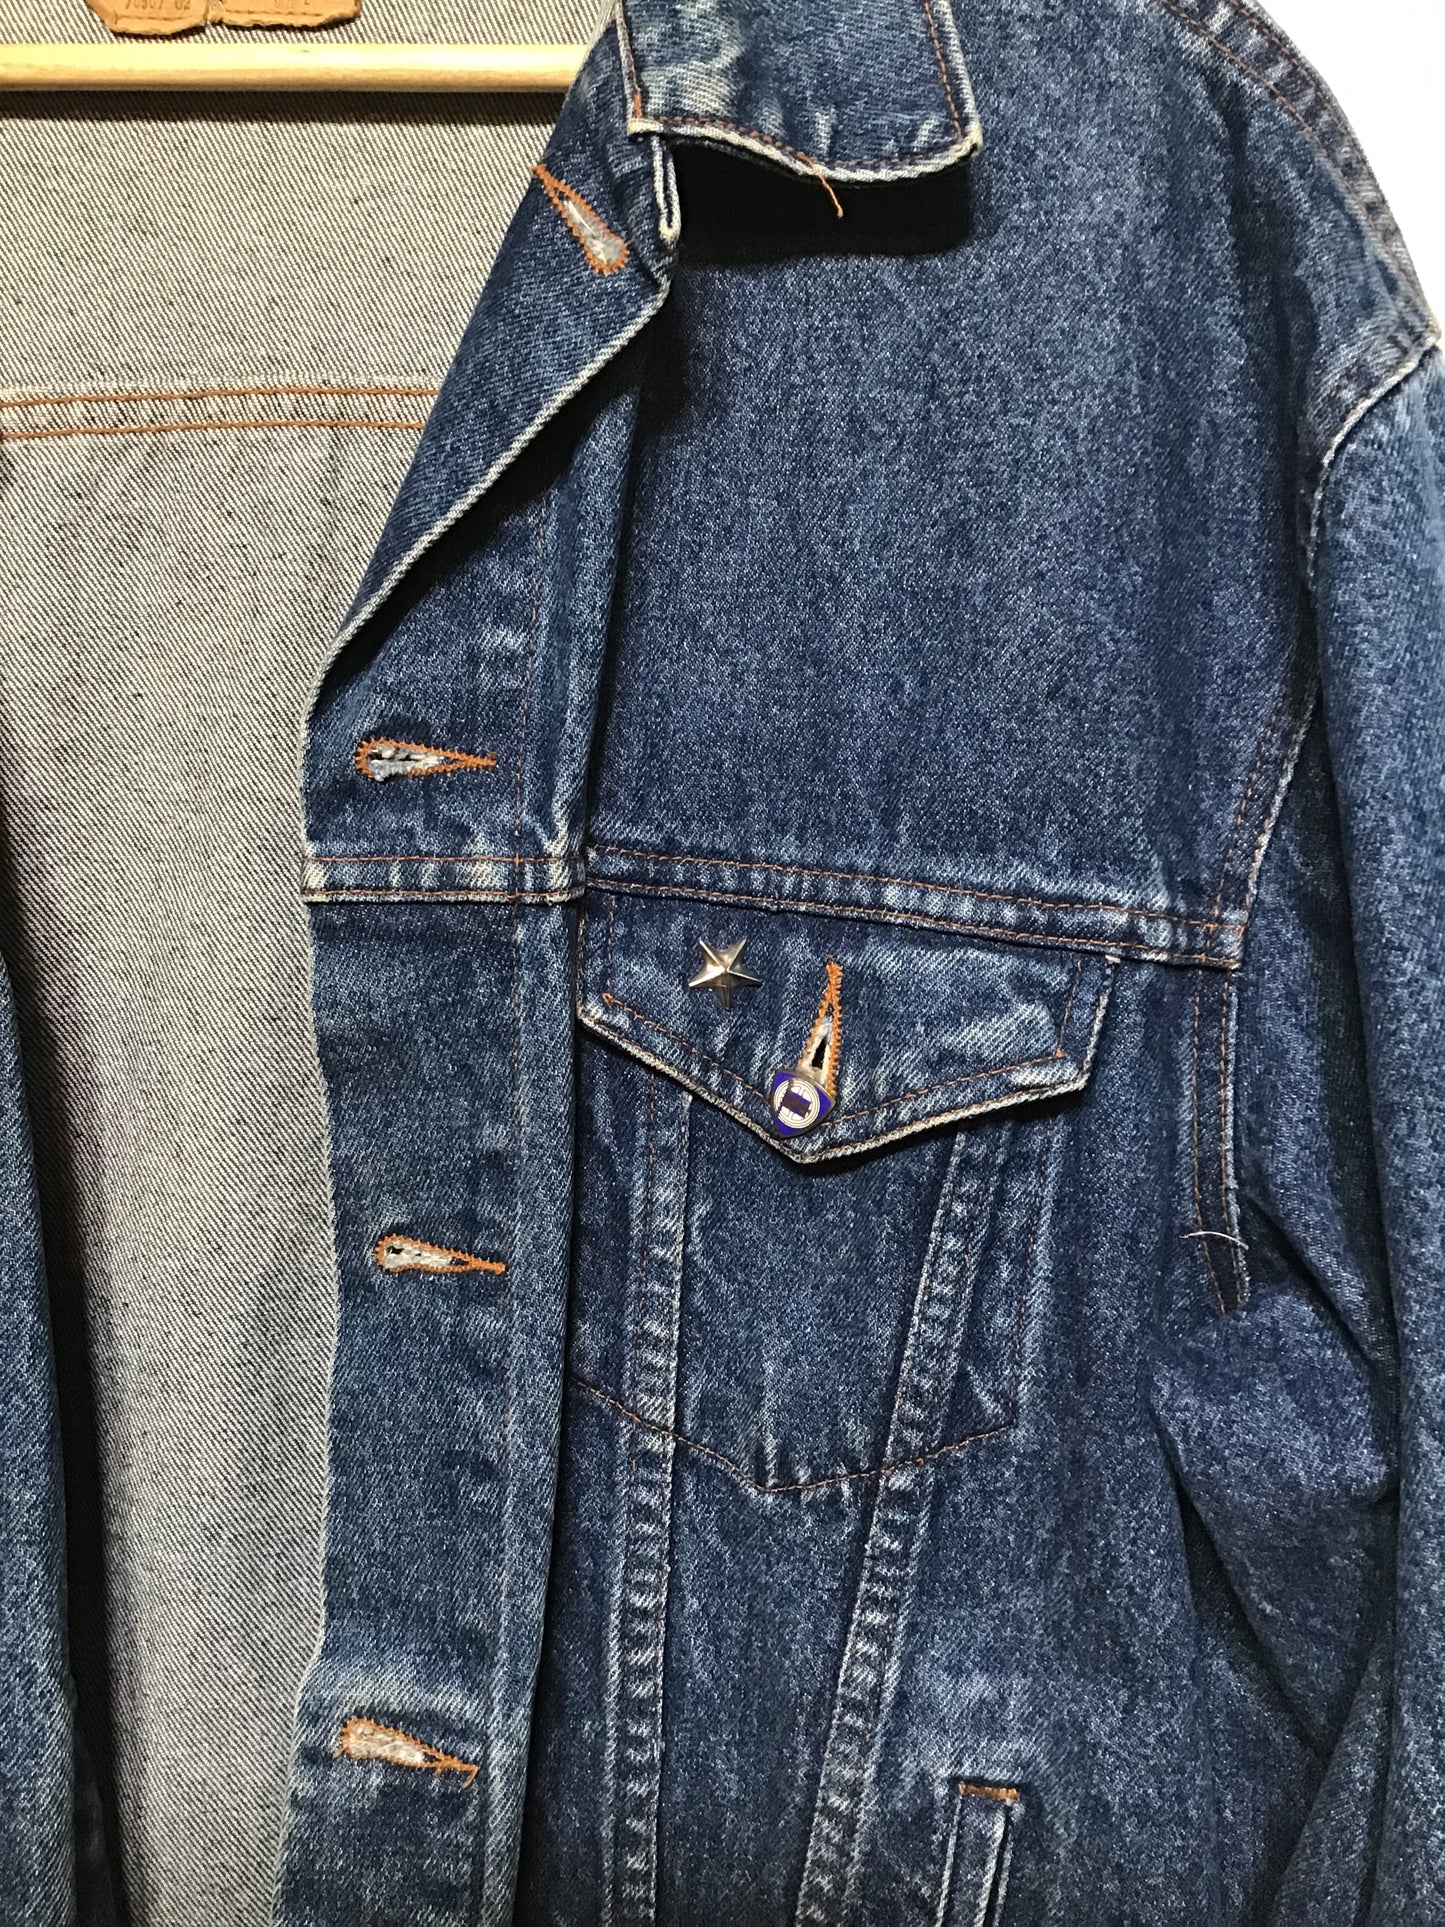 Levi’s Denim Jacket (Size L)